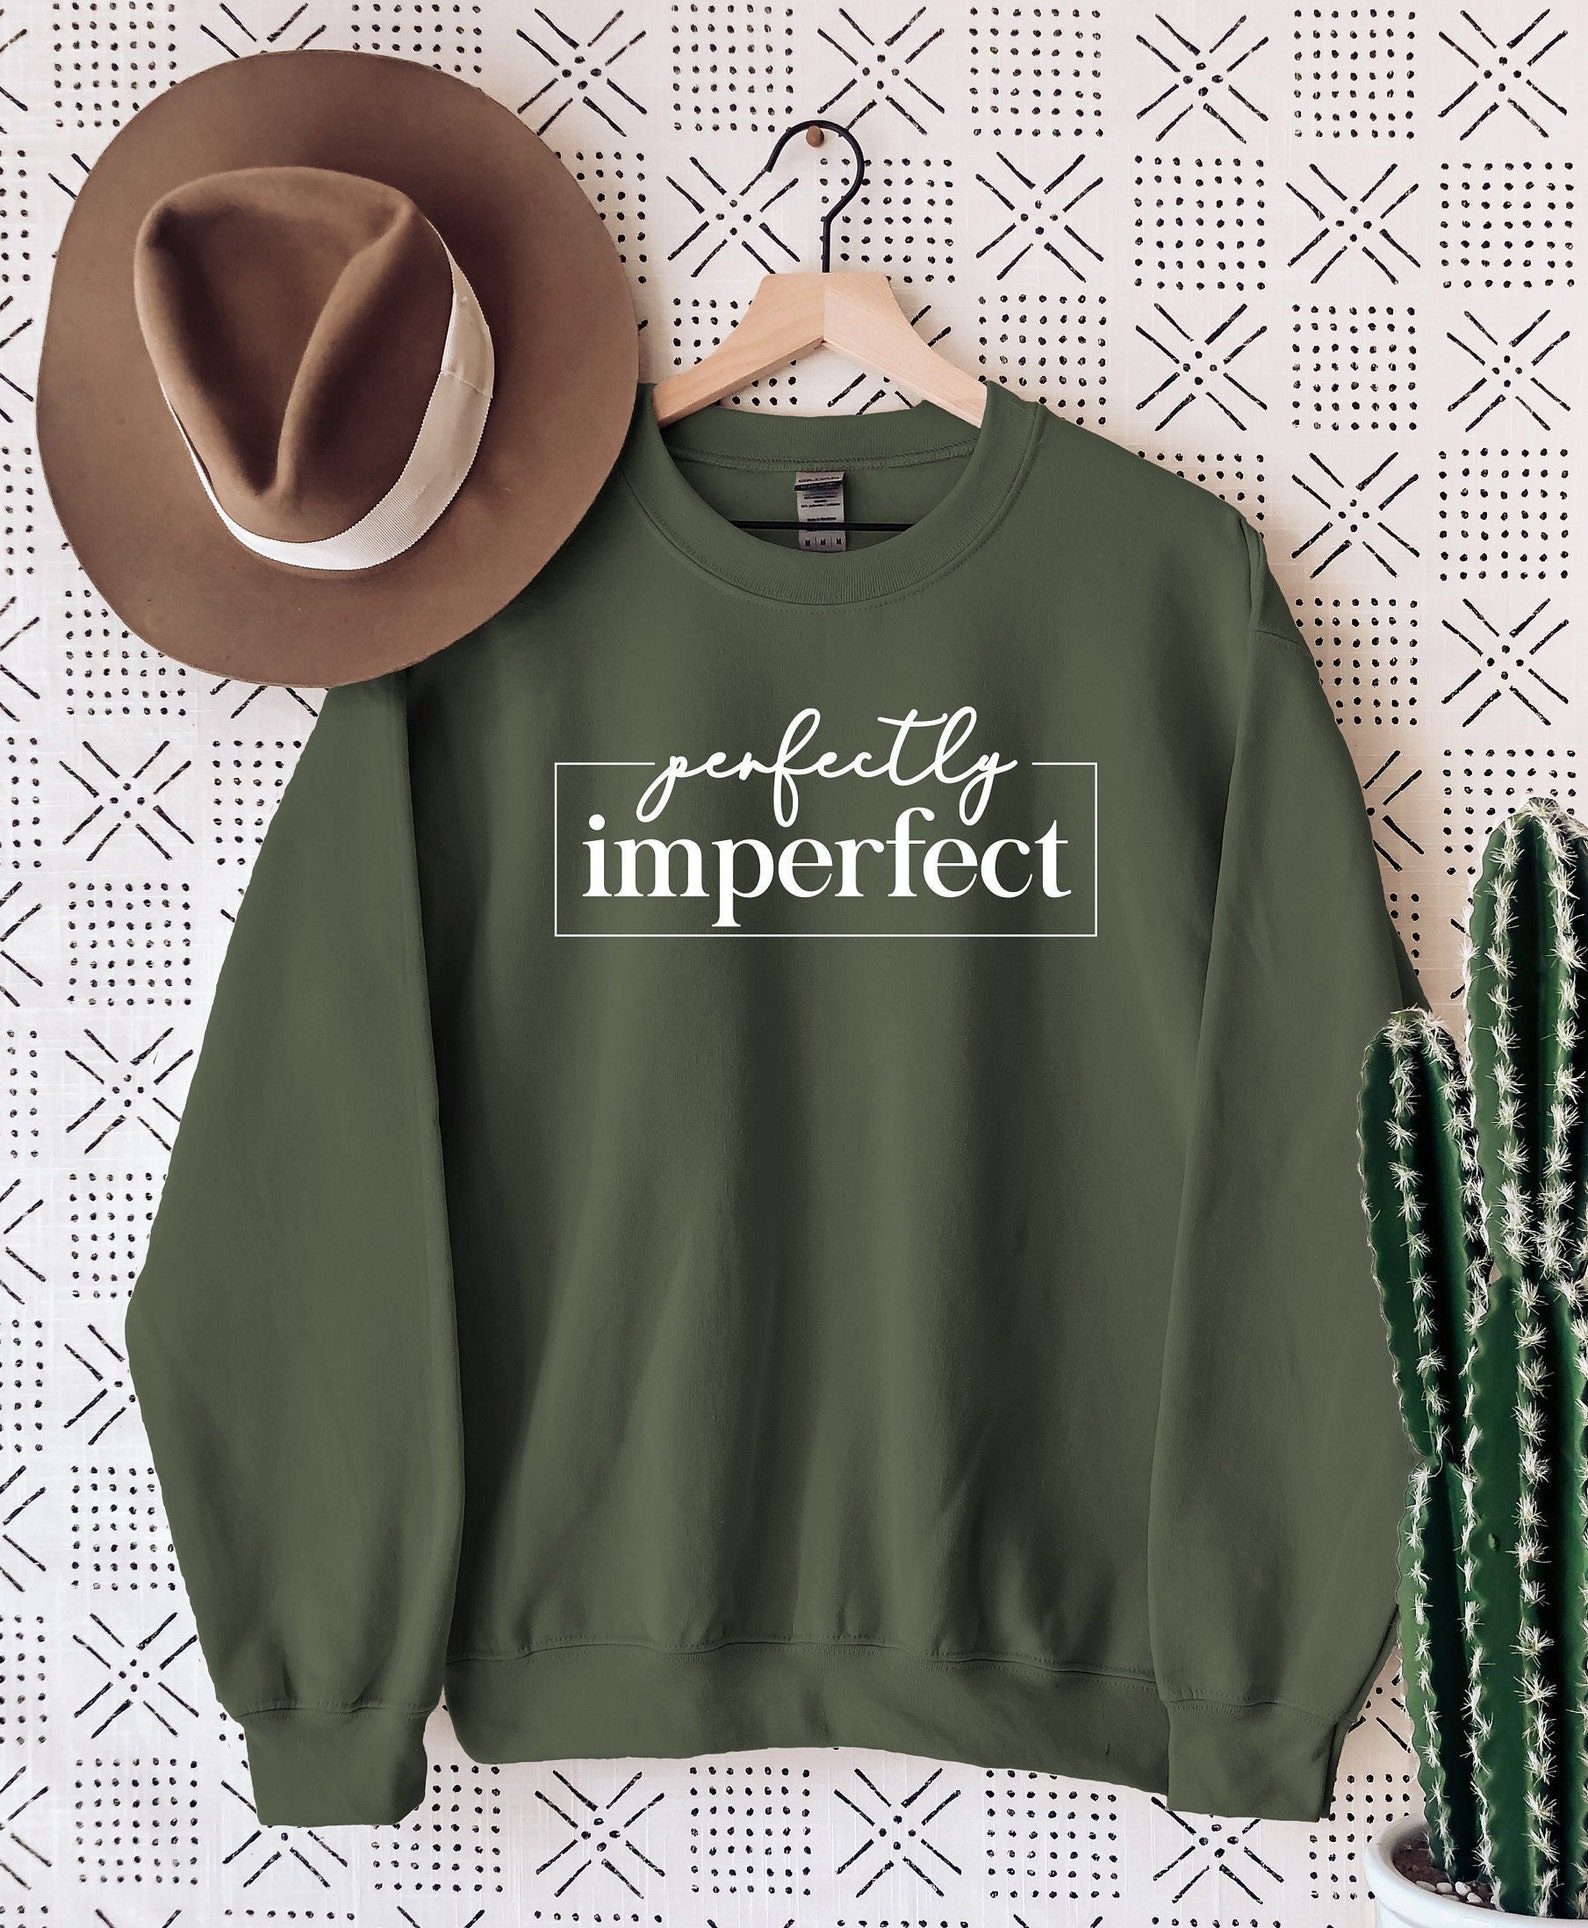 Perfectly Imperfect Shirt Sweatshirt Inspirational Quotes | Etsy